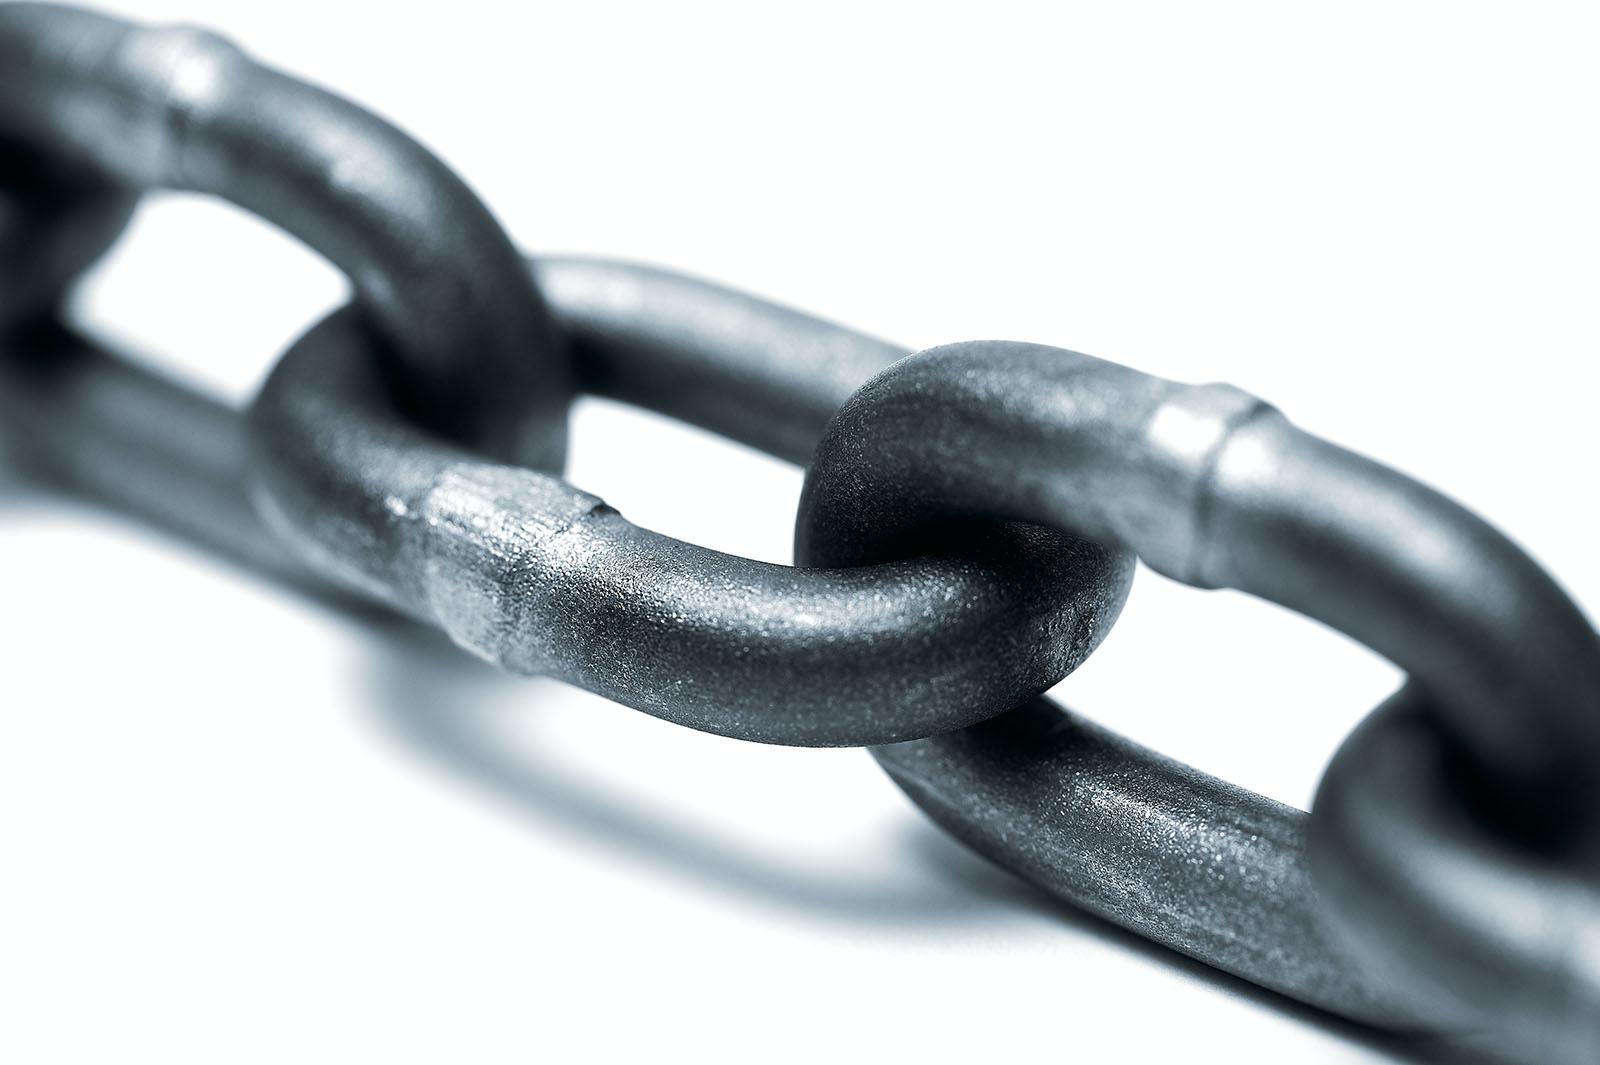 Links of a chain - Image: https://unsplash.com/@edge2edgemedia